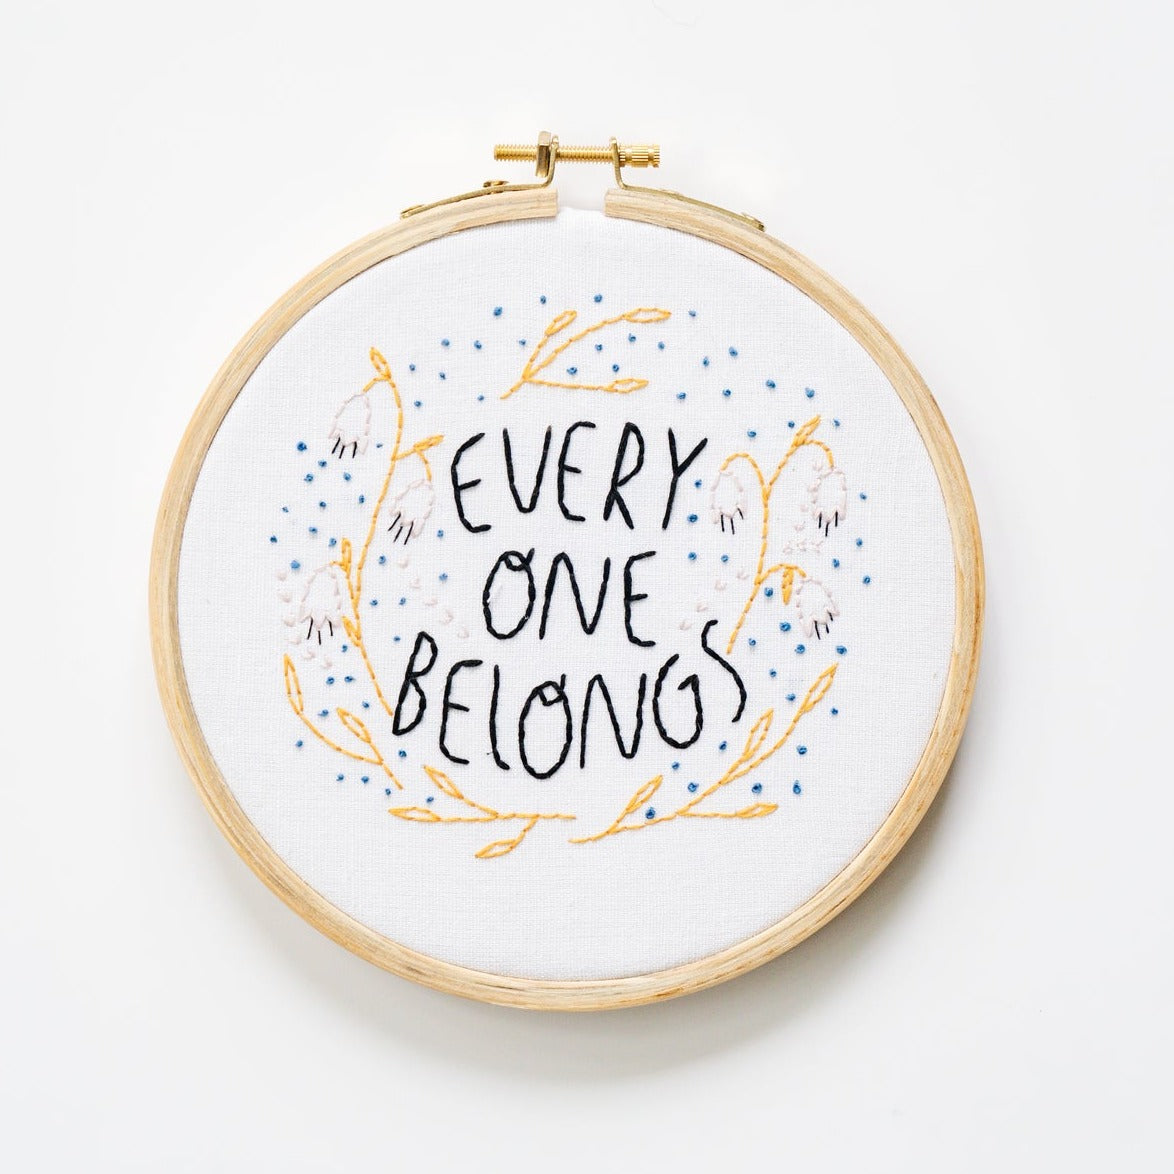 Everyone Belongs Embroidery Pattern - PDF